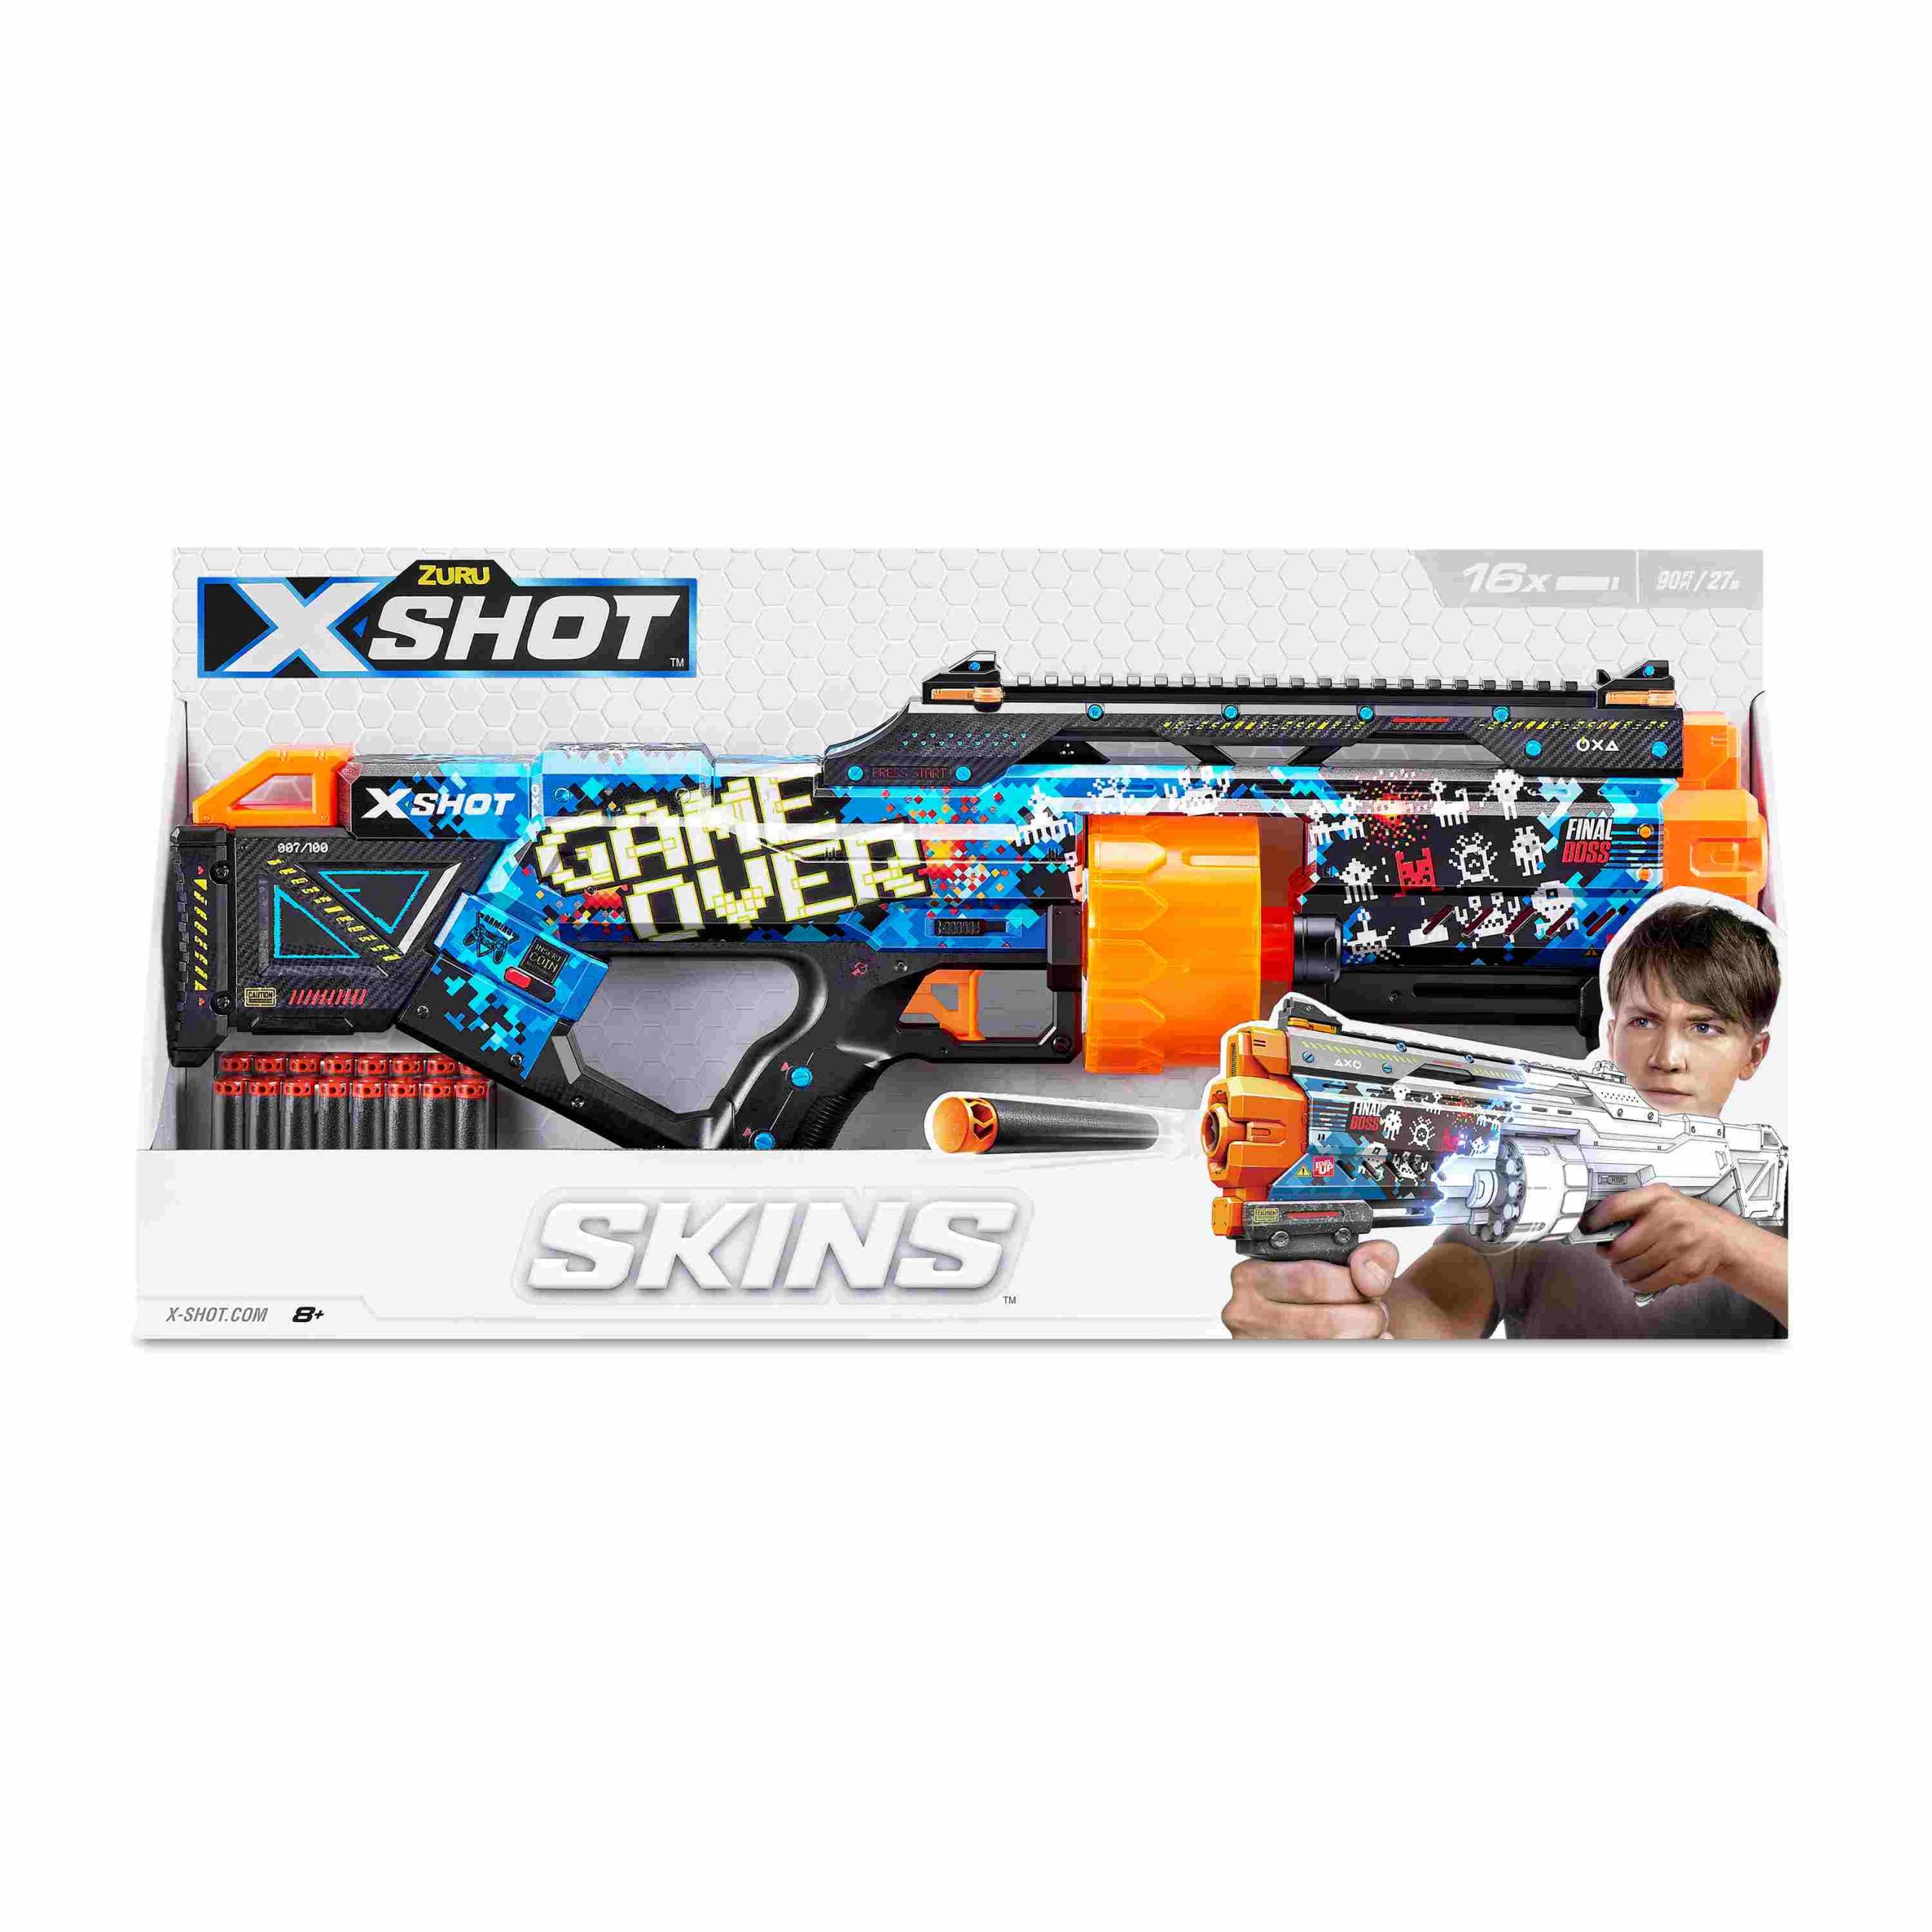 Xshot skins last stand game over - SUN&SPORT ORIG, X-SHOT